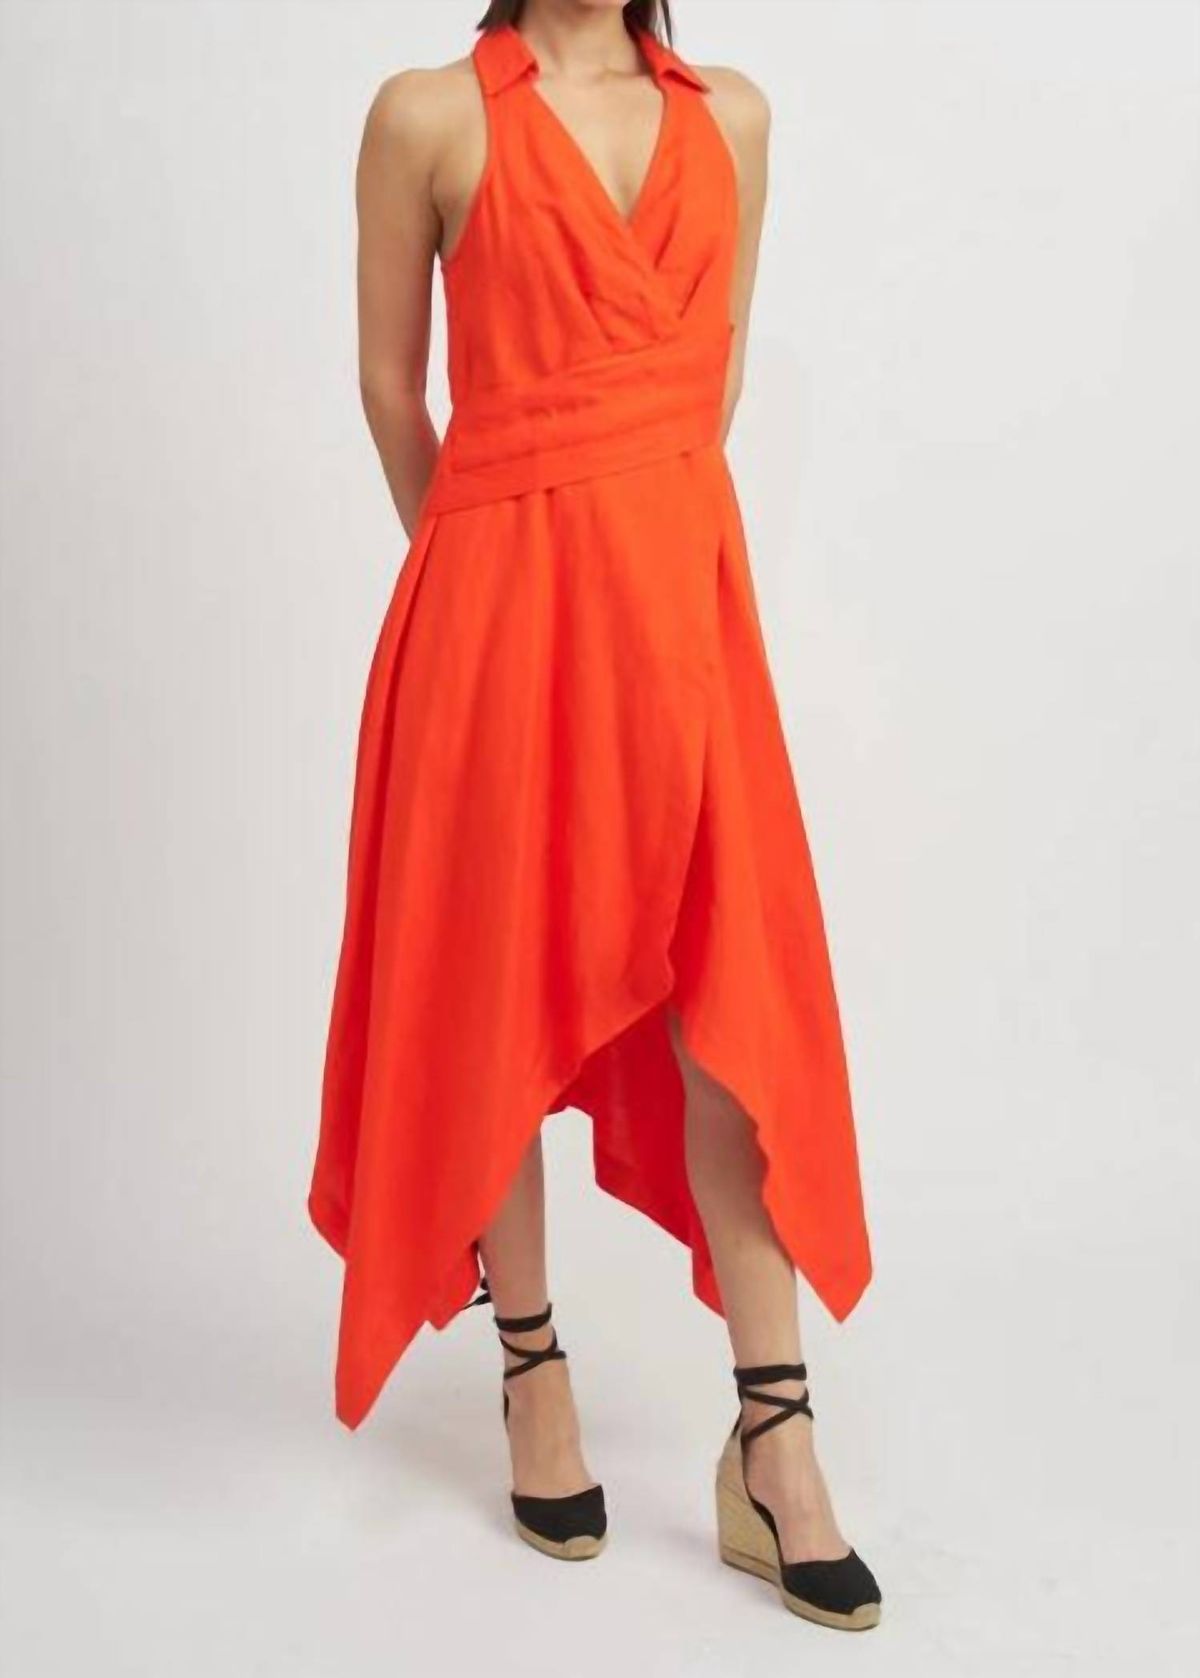 Style 1-1270903777-2901 En Saison Size M High Neck Orange Cocktail Dress on Queenly